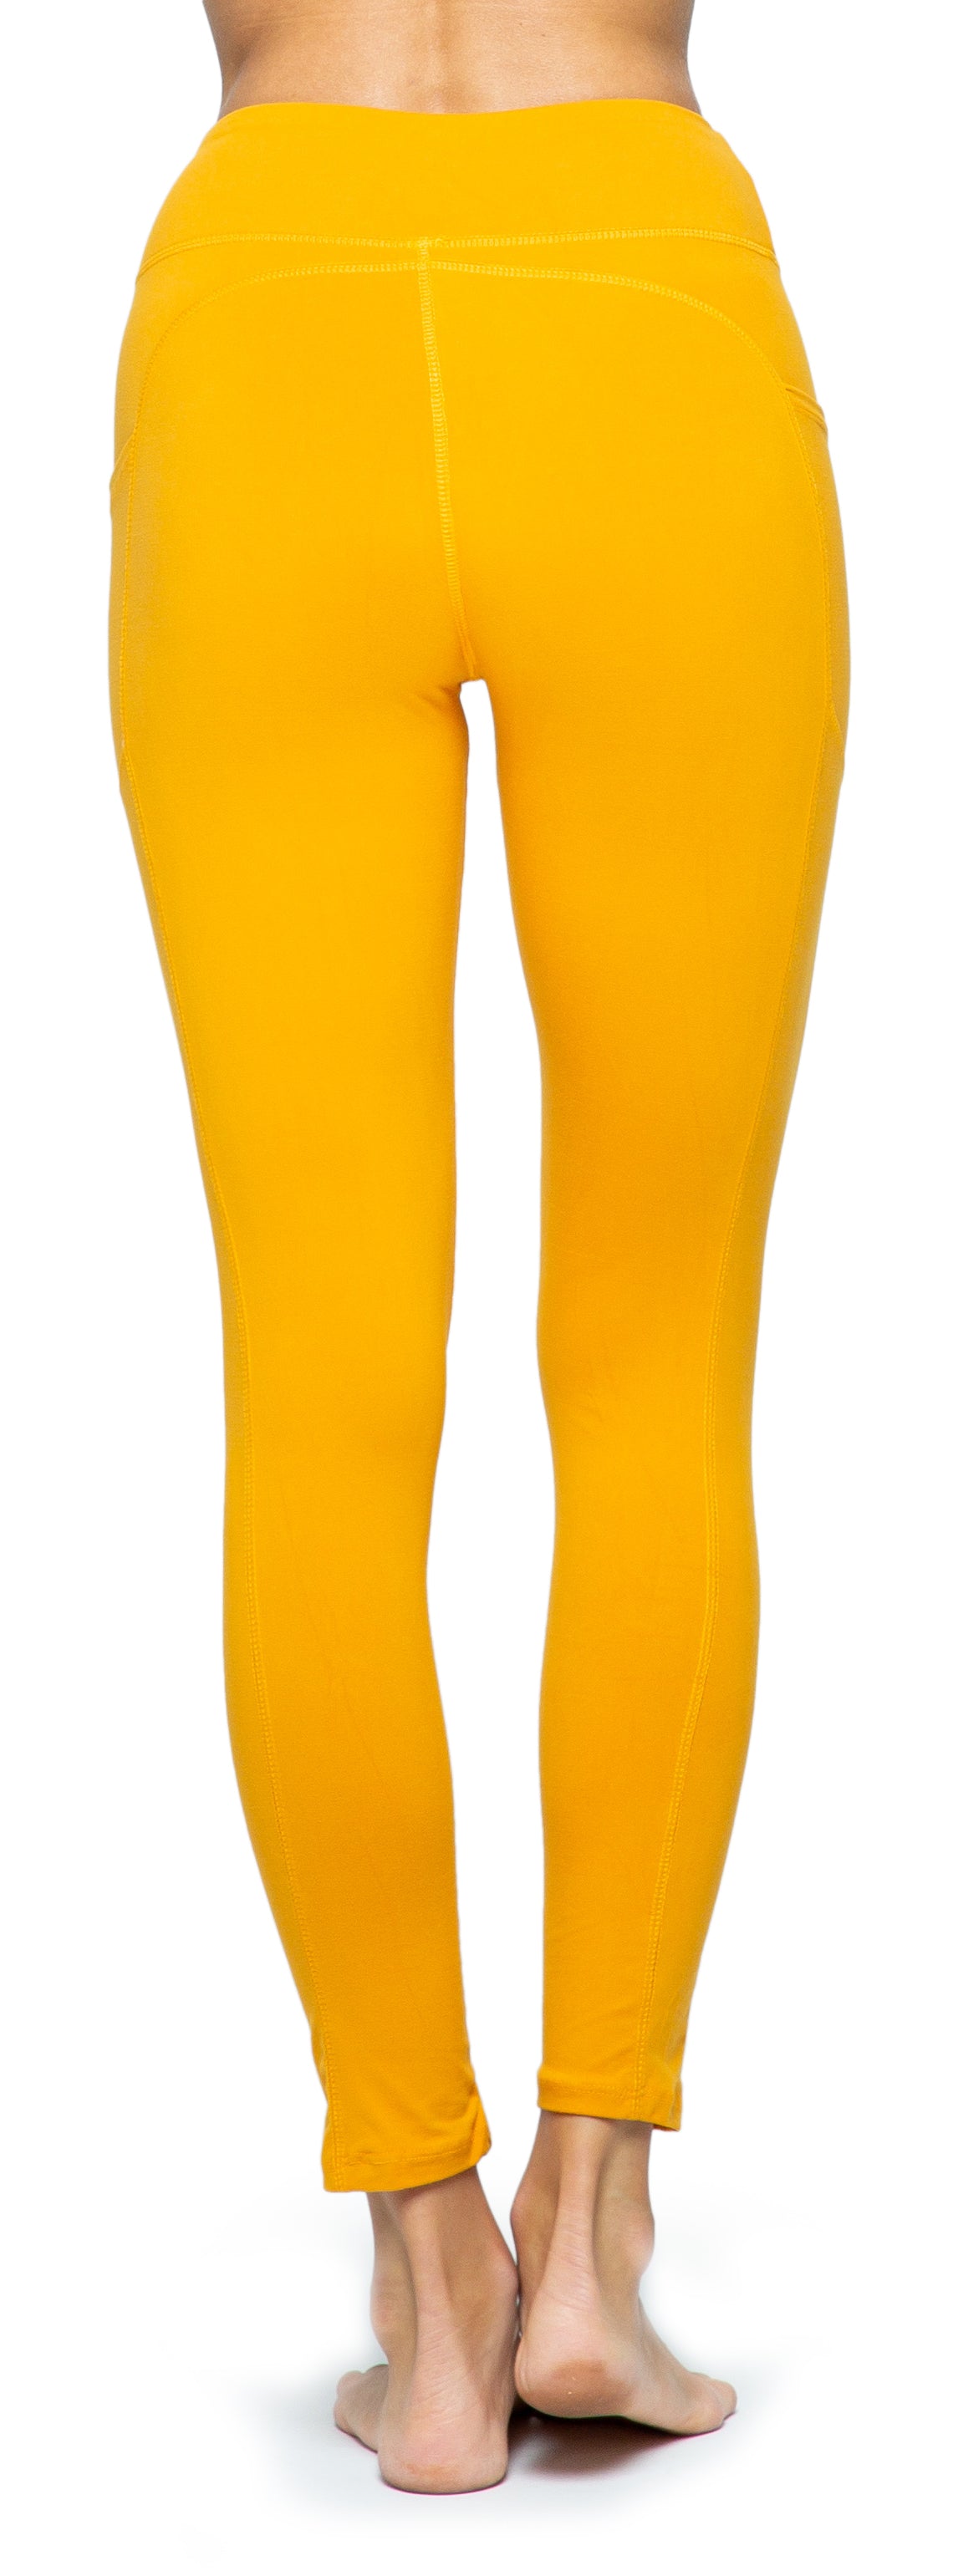 KOGMO Womens Premium Cotton Full Length Leggings Multi Colors (S-XL)